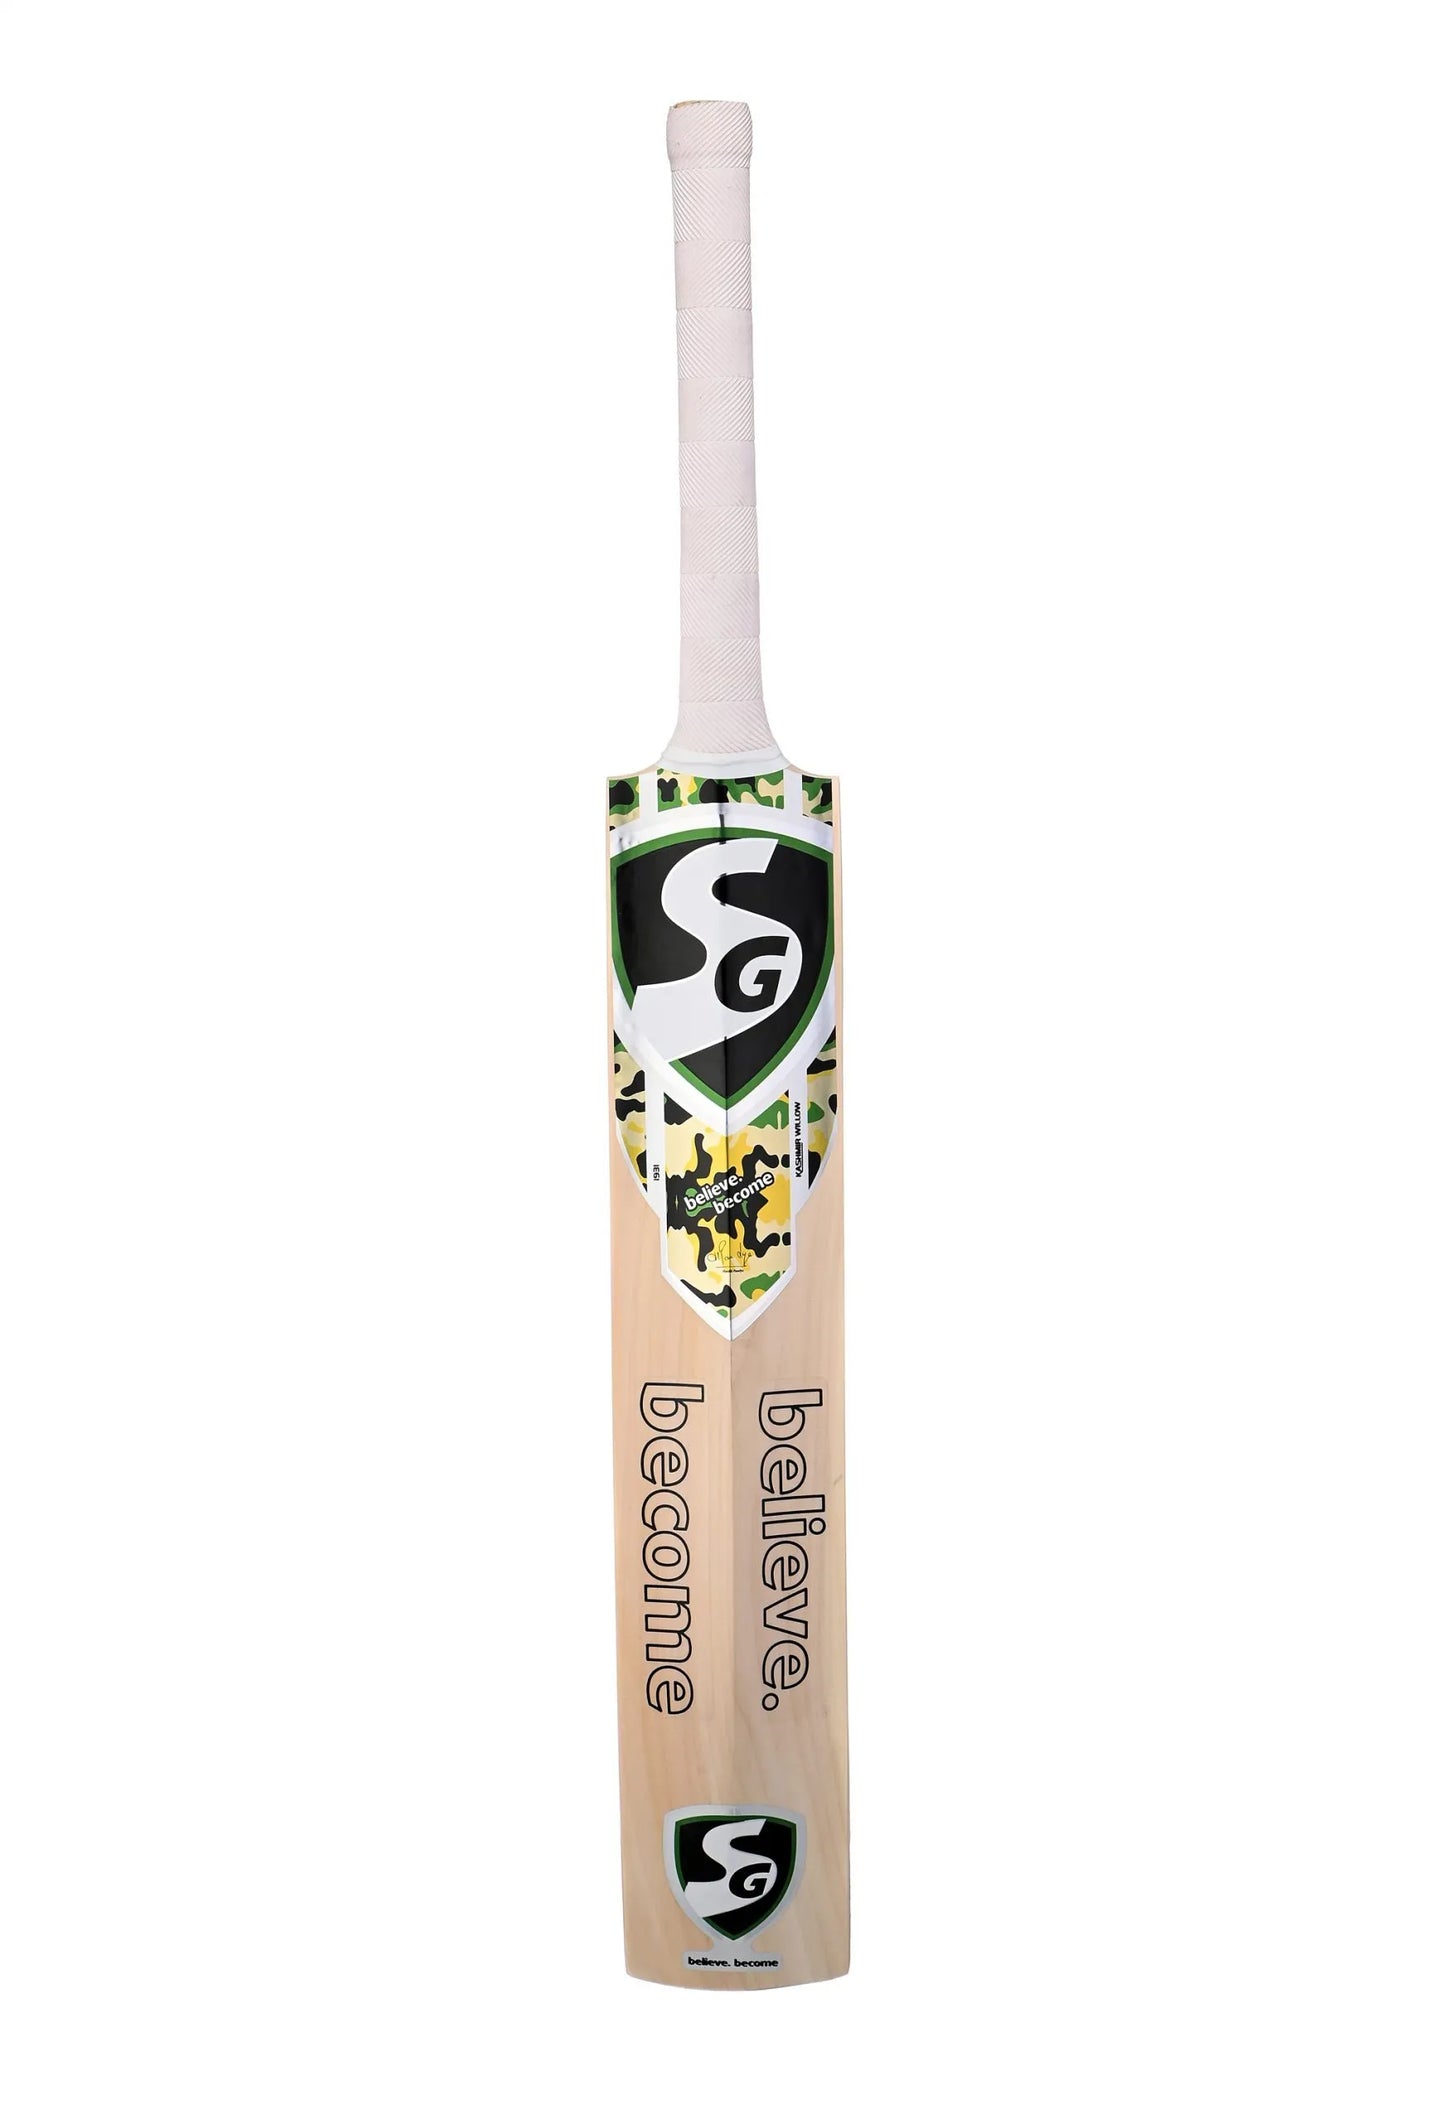 SG Savage Plus Top Quality Kashmir Willow Cricket Bat